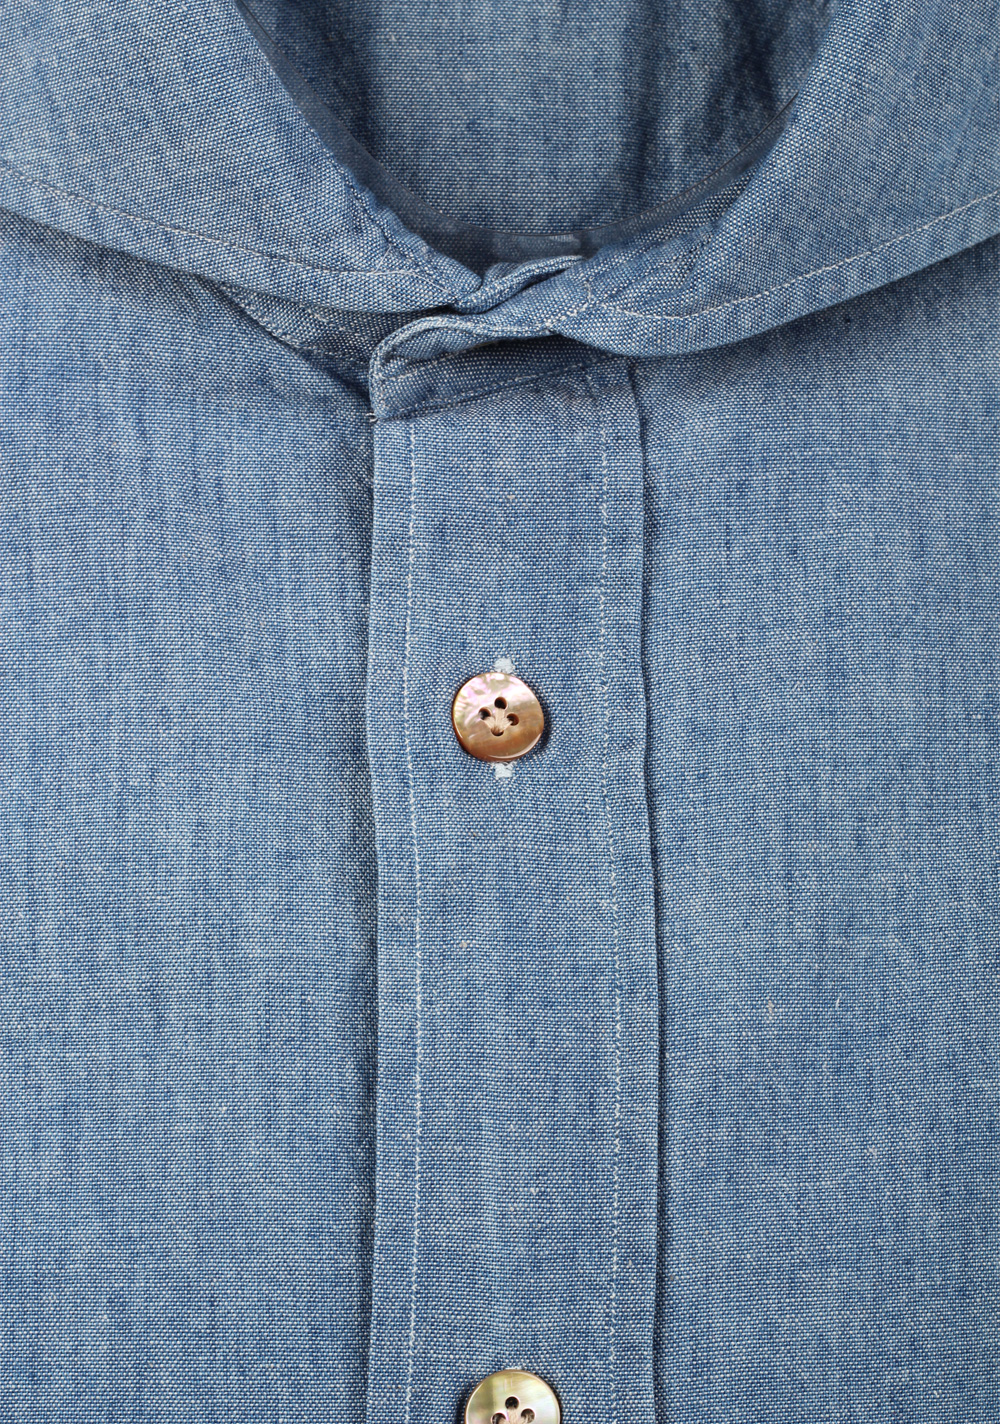 Mazzarelli Denim Shirt Size 42 / 16,5 U.S. In Cotton | Costume Limité